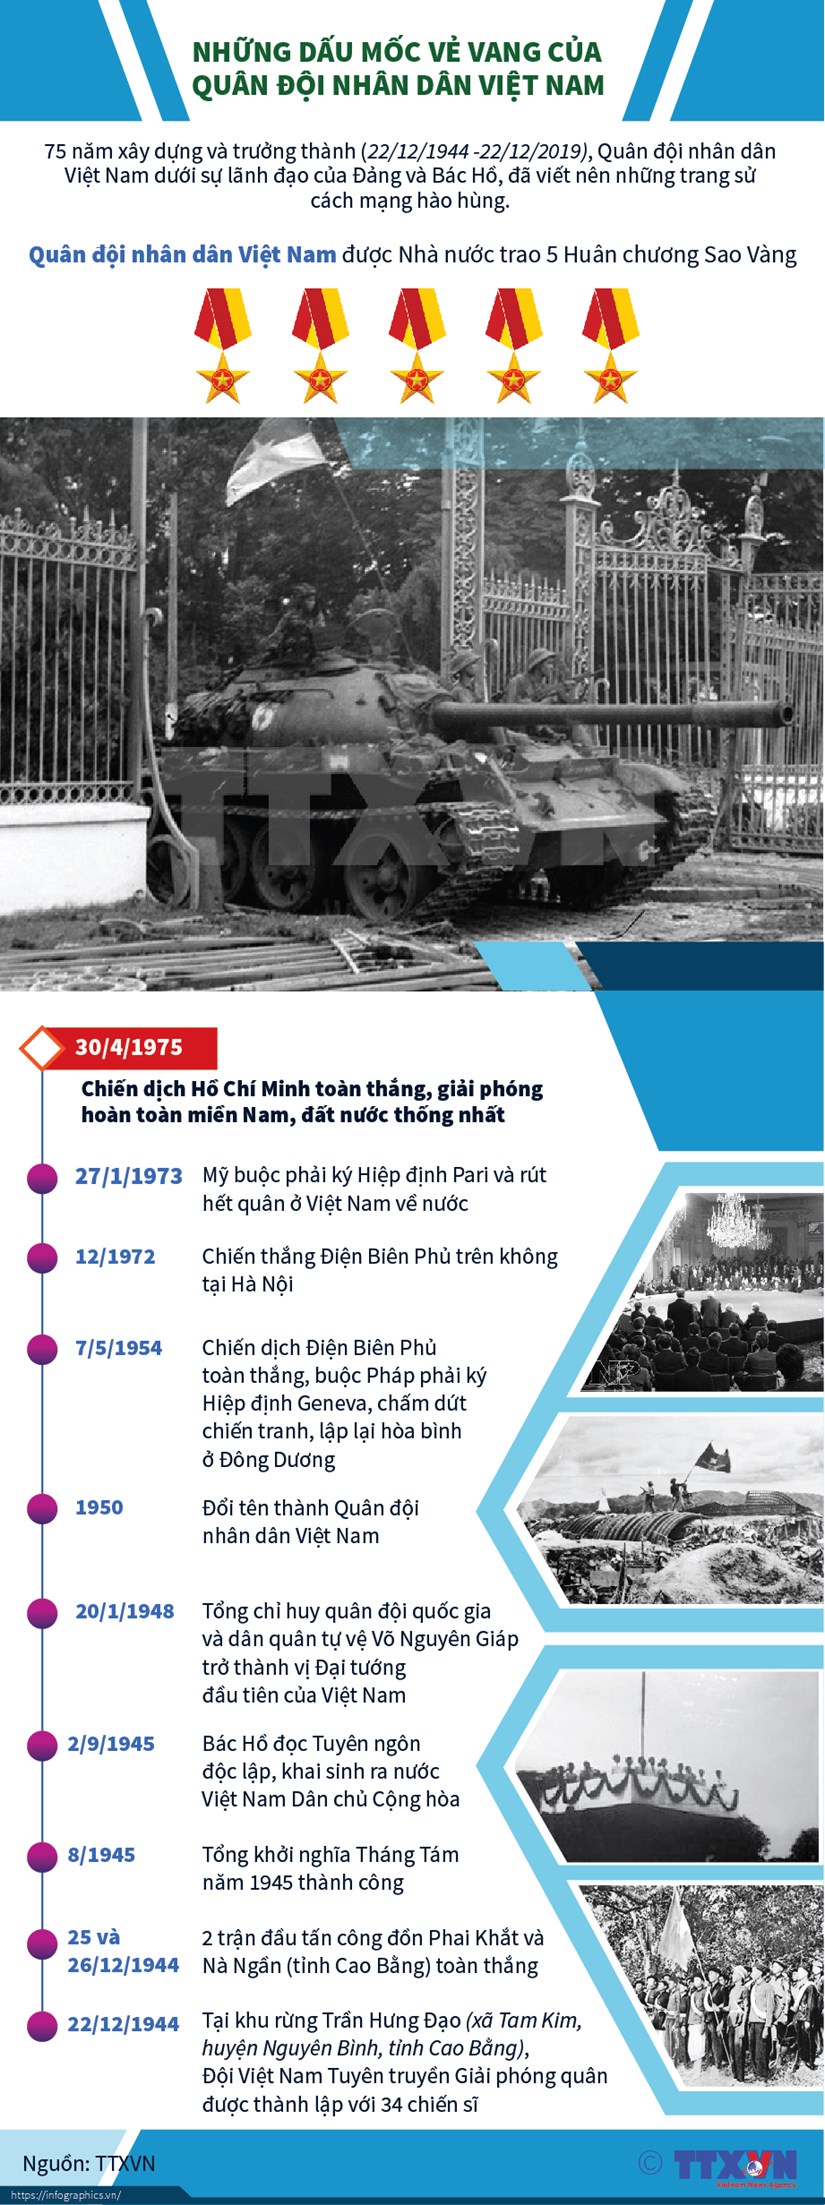 [Infographics] Nhung dau moc ve vang cua Quan doi nhan dan Viet Nam hinh anh 1